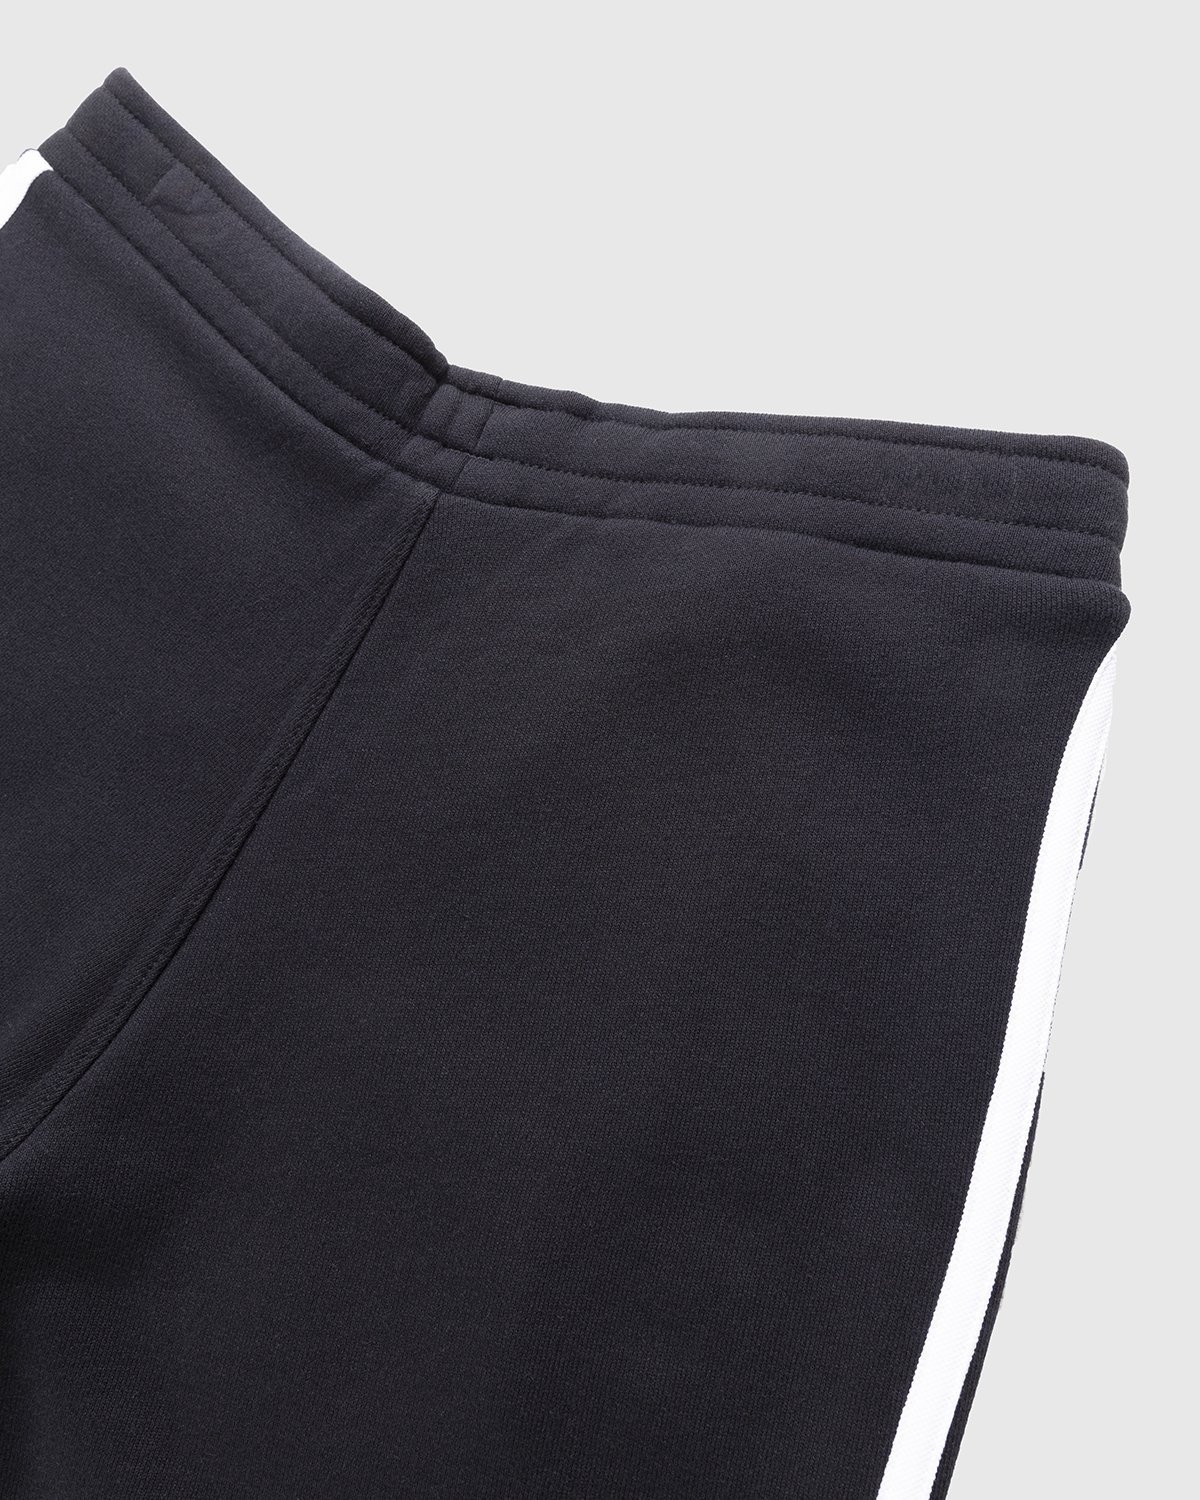 Adidas – 3 Stripe Short Black - Shorts - Black - Image 5